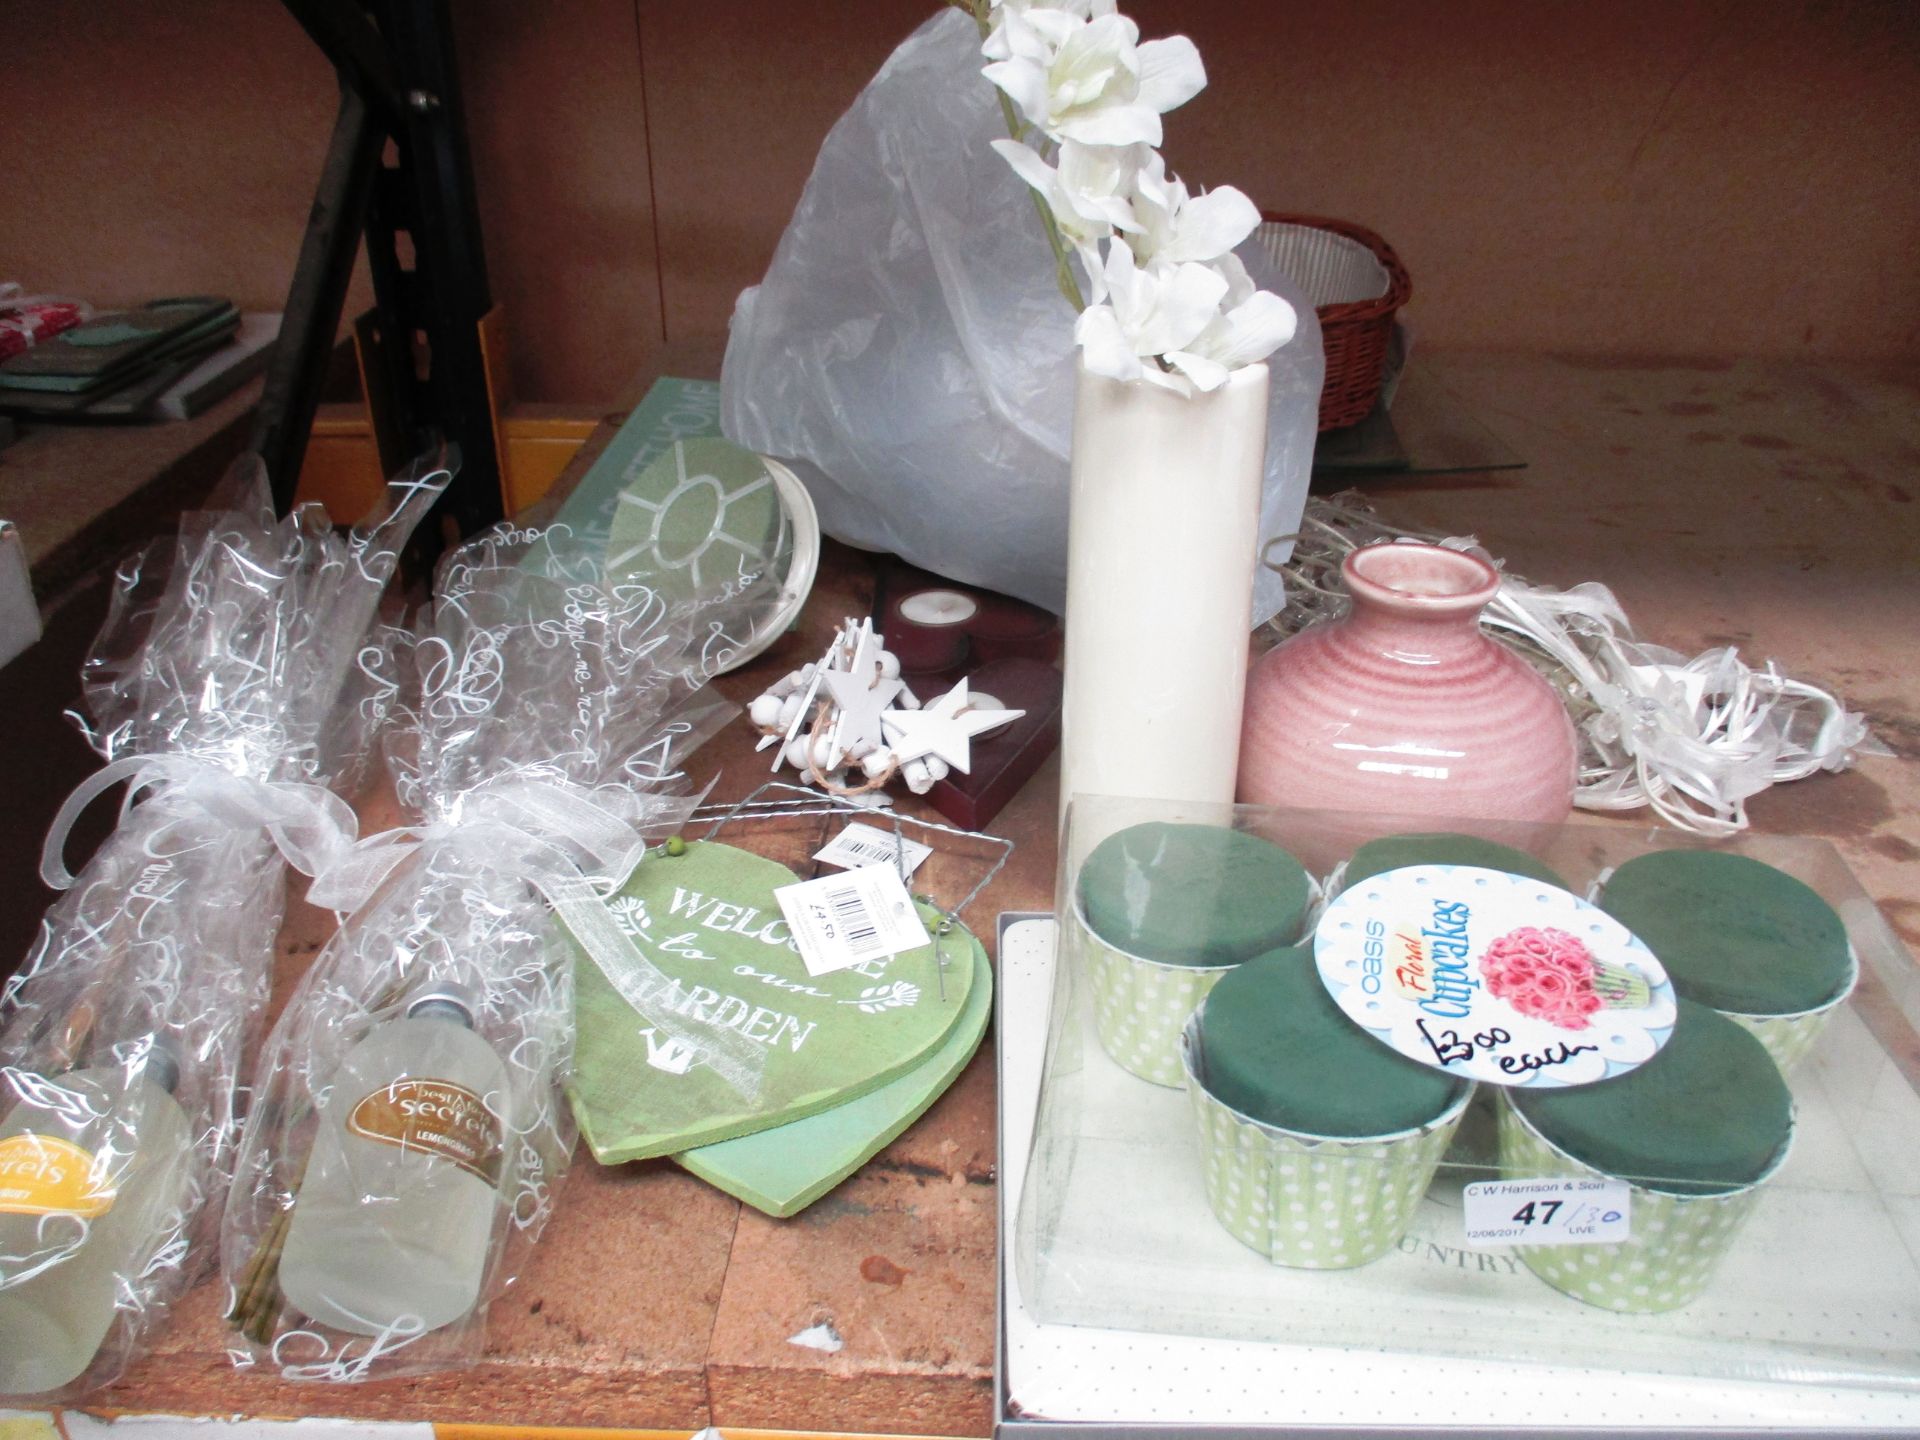 30 x assorted items - vases, wicker baskets, fairy lights, garden hanging signs,